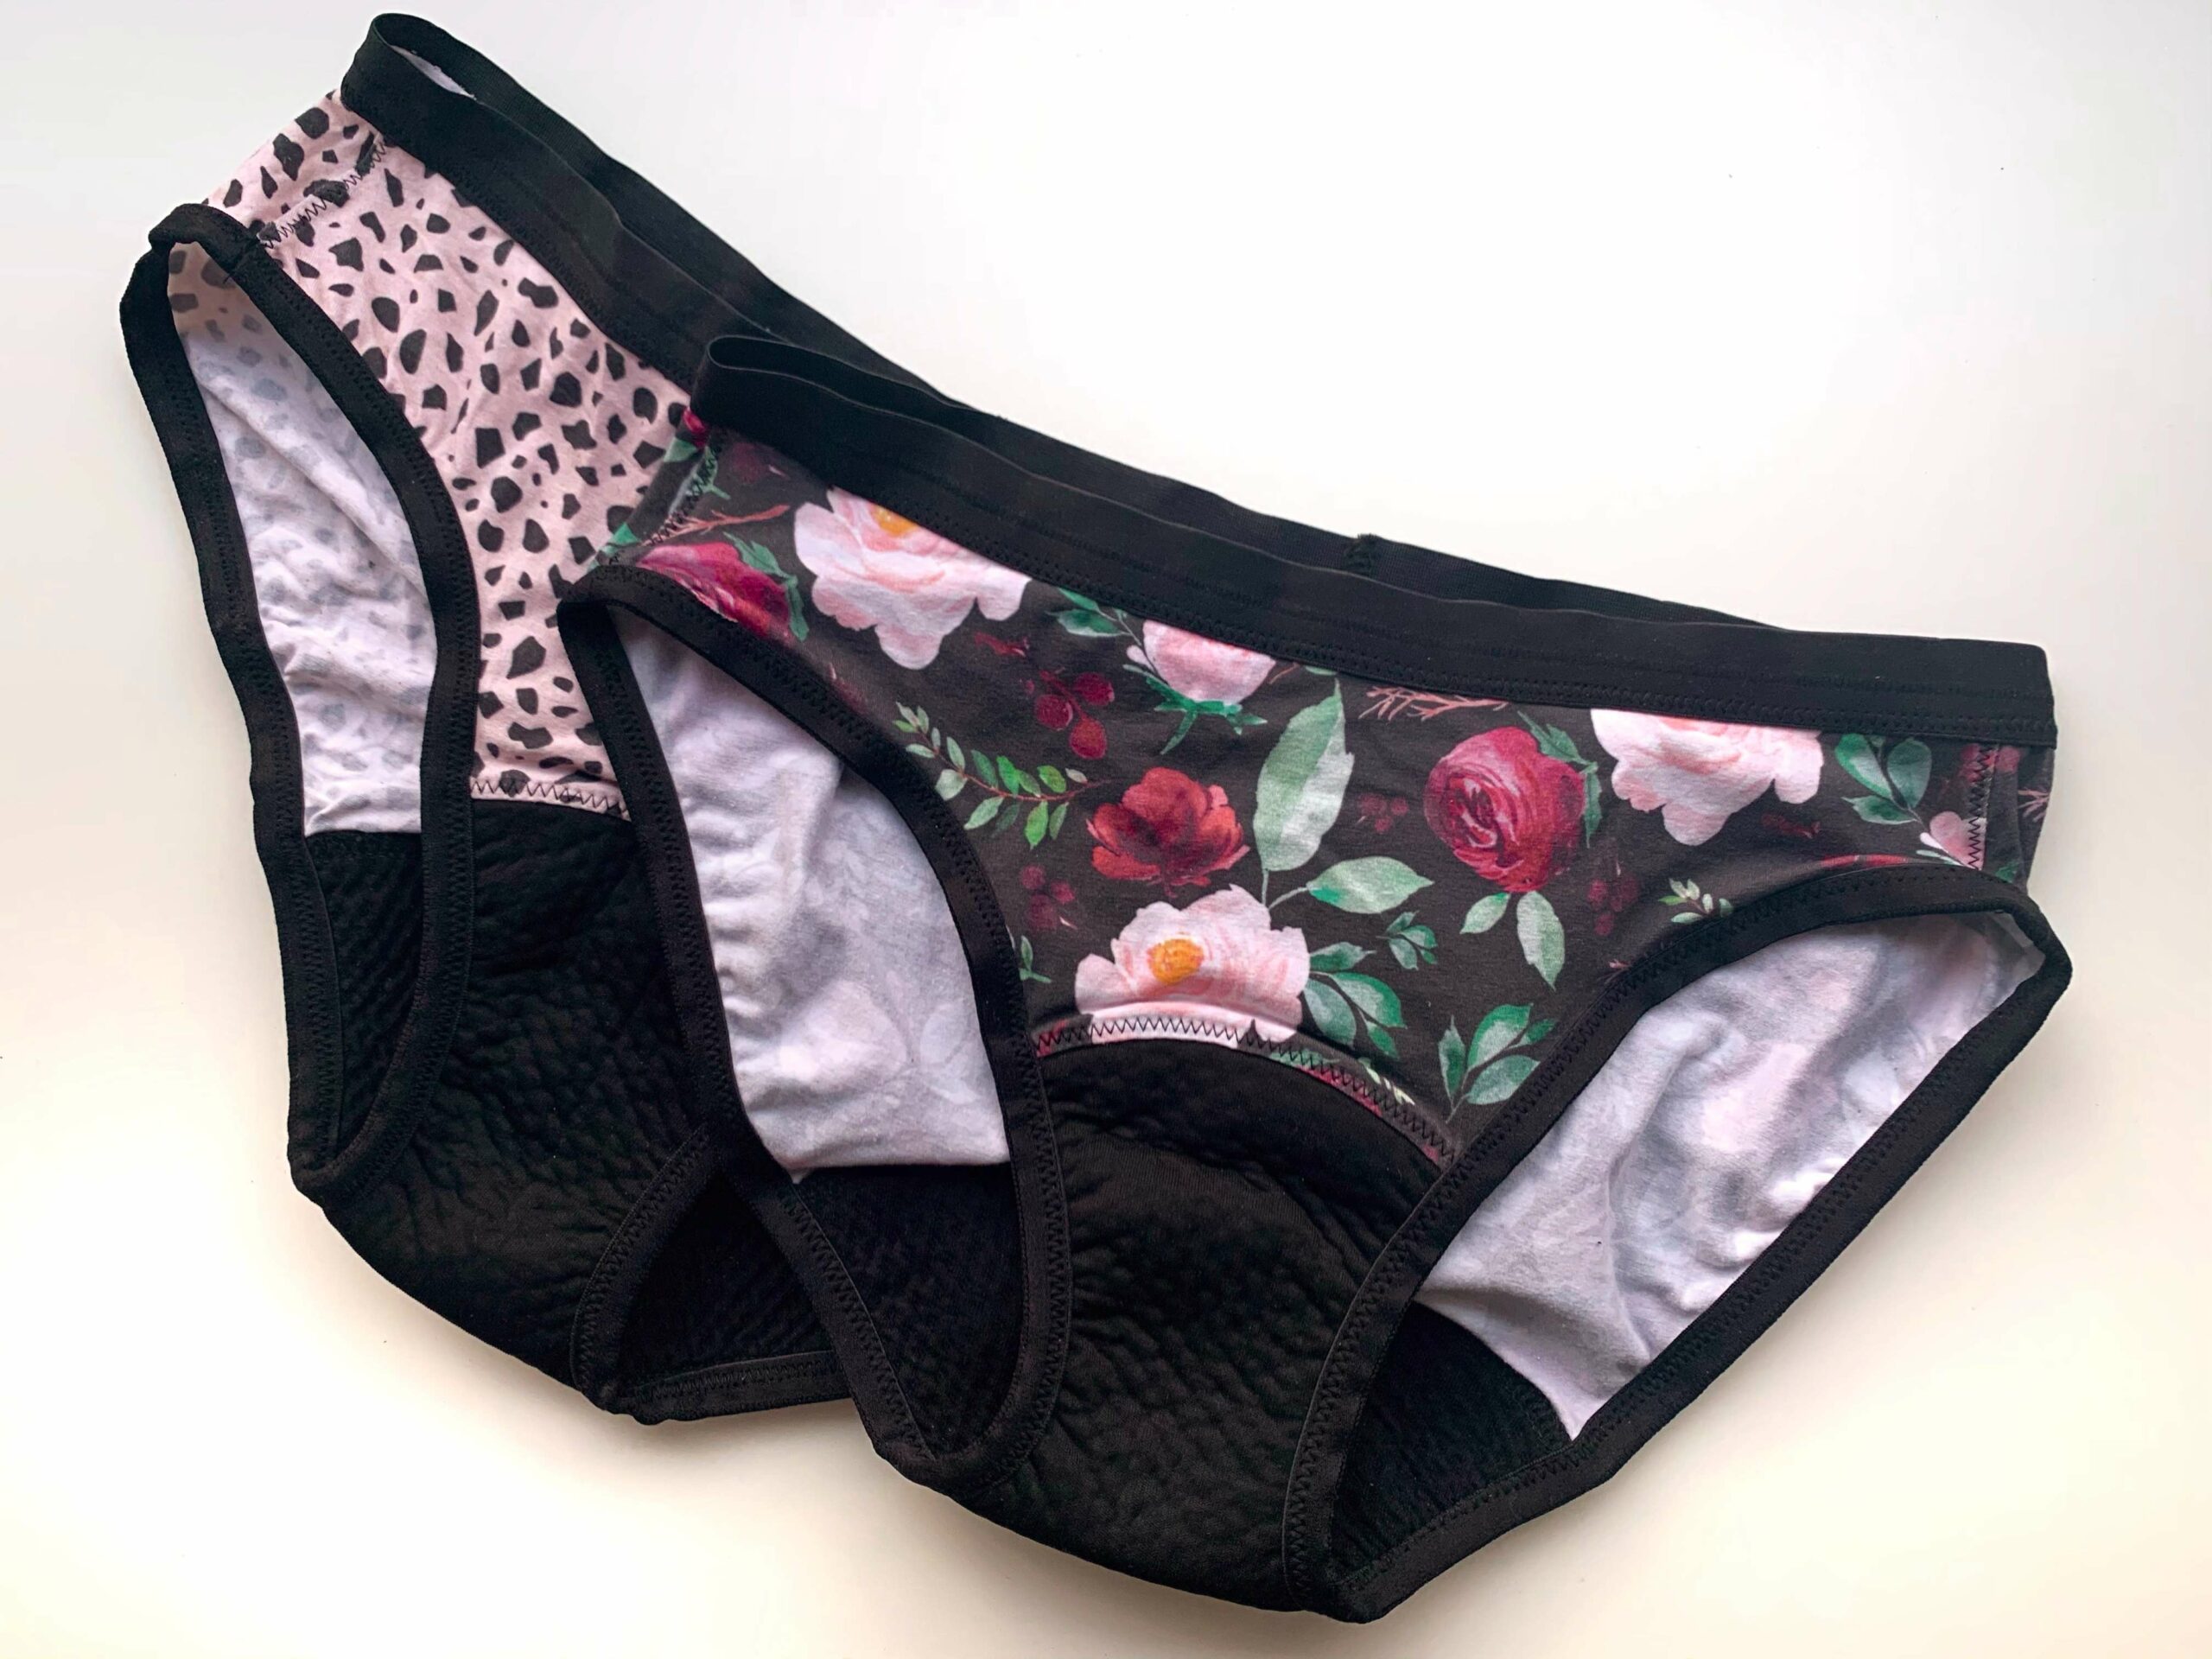 2 Pairs Ladies Fashion Flower Design Underwear Special Knickers Briefs Panties 